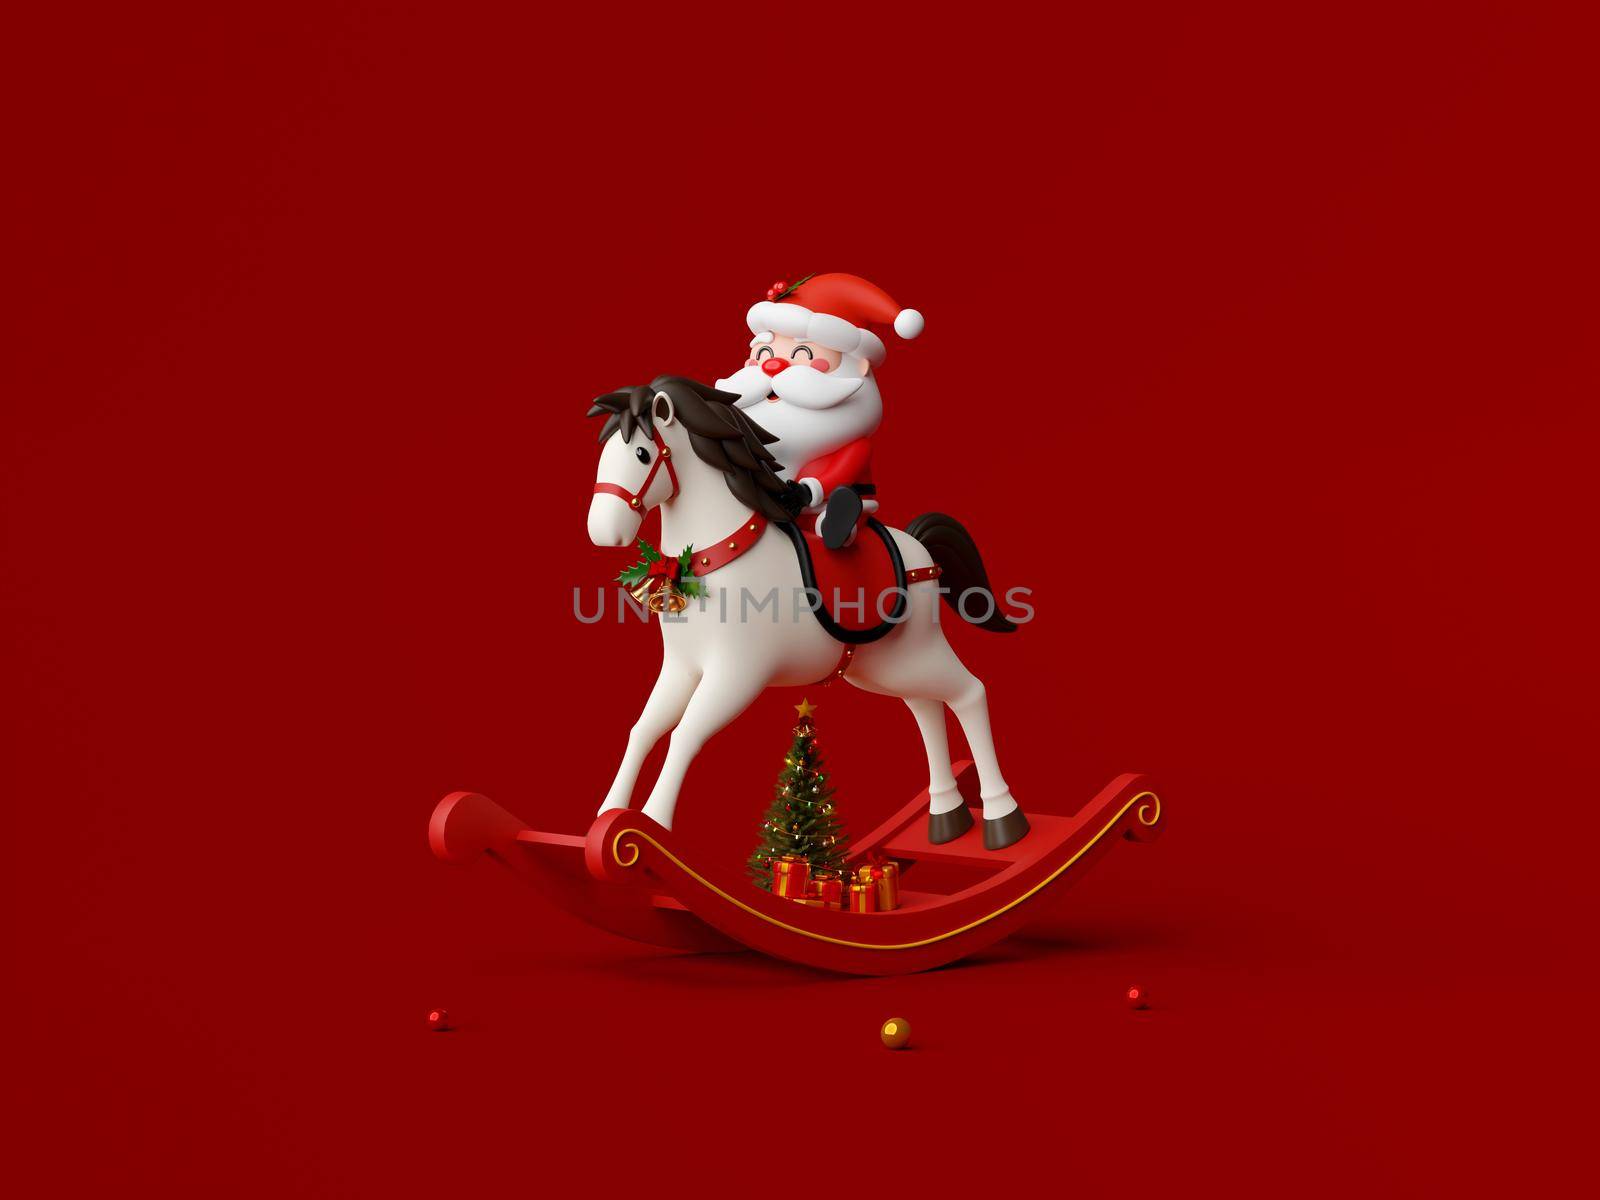 3d illustration of Santa Claus riding rocking horse on red background by nutzchotwarut